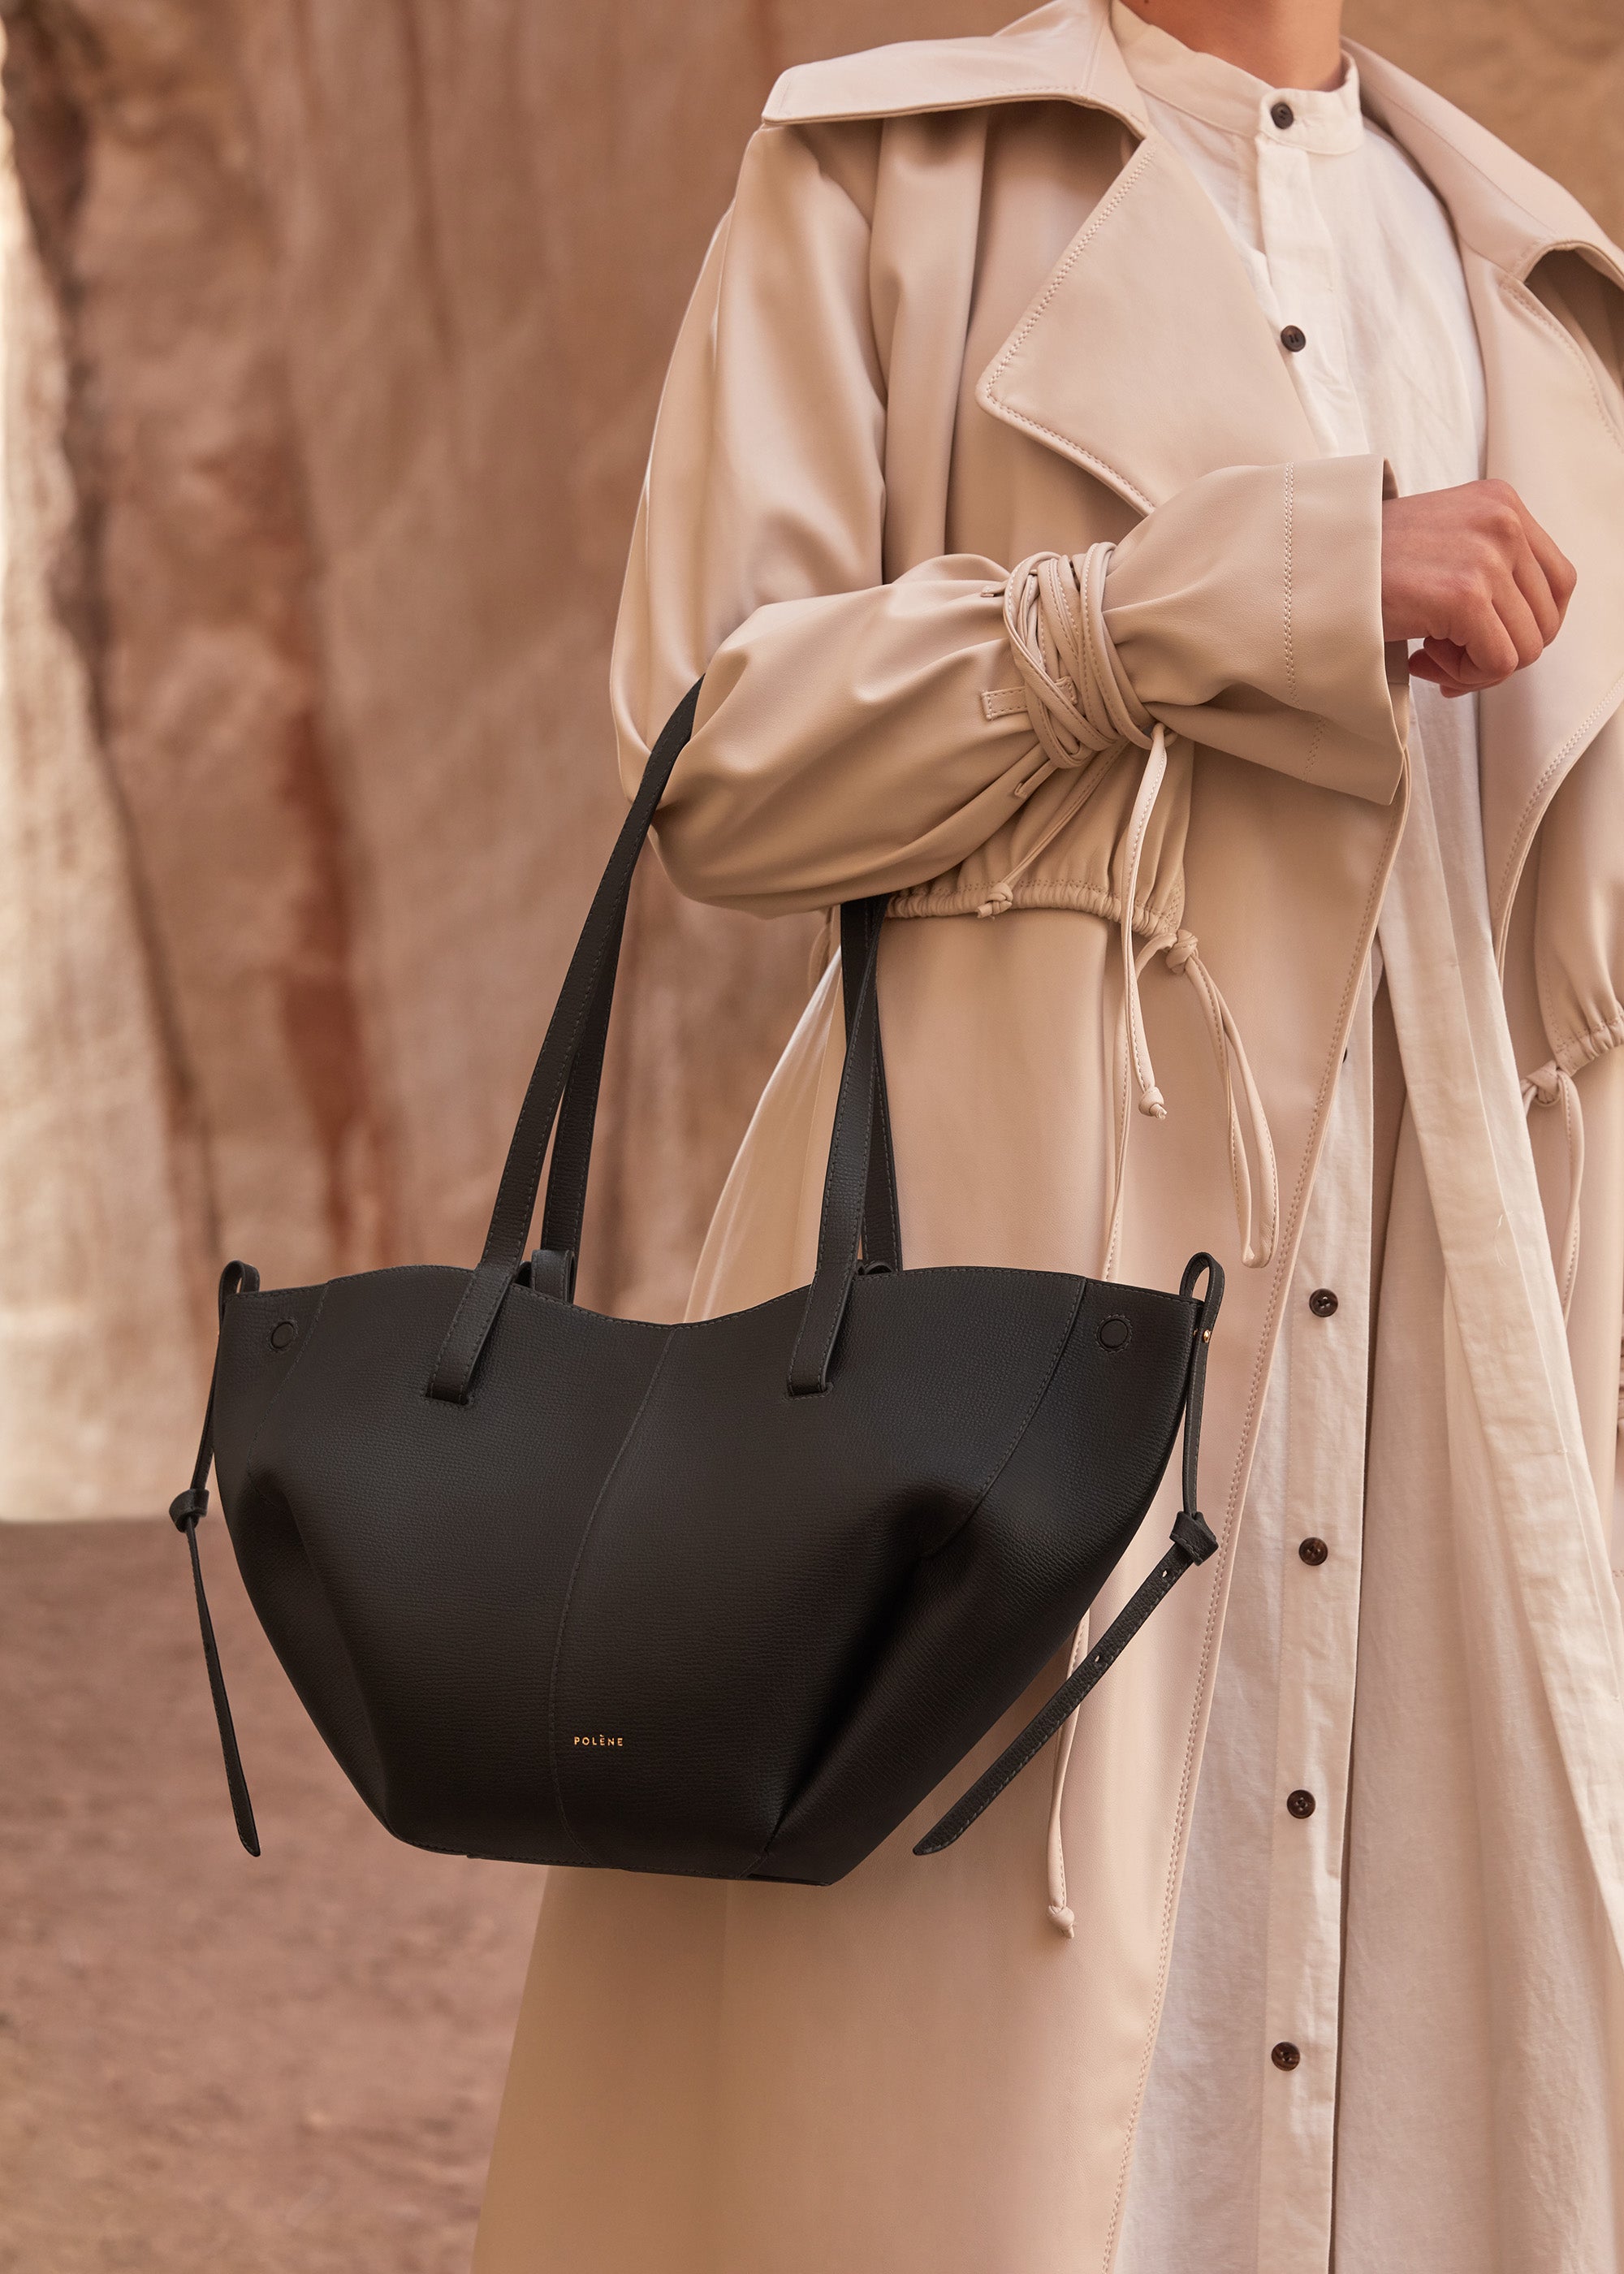 Polène | Bag - Cyme Mini - Black Textured Leather